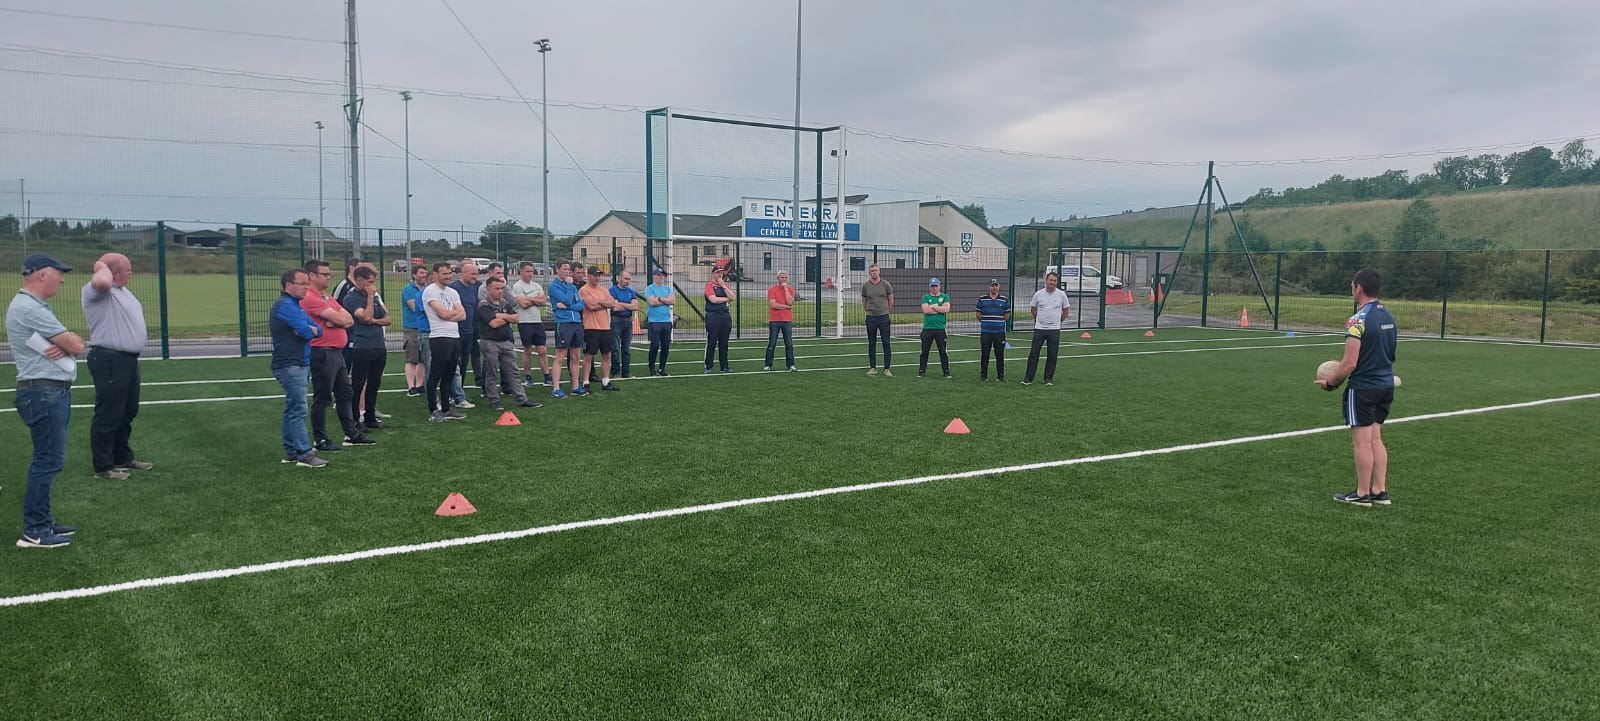 U11 Liam Stirrat Development League kicks off this Saturday!